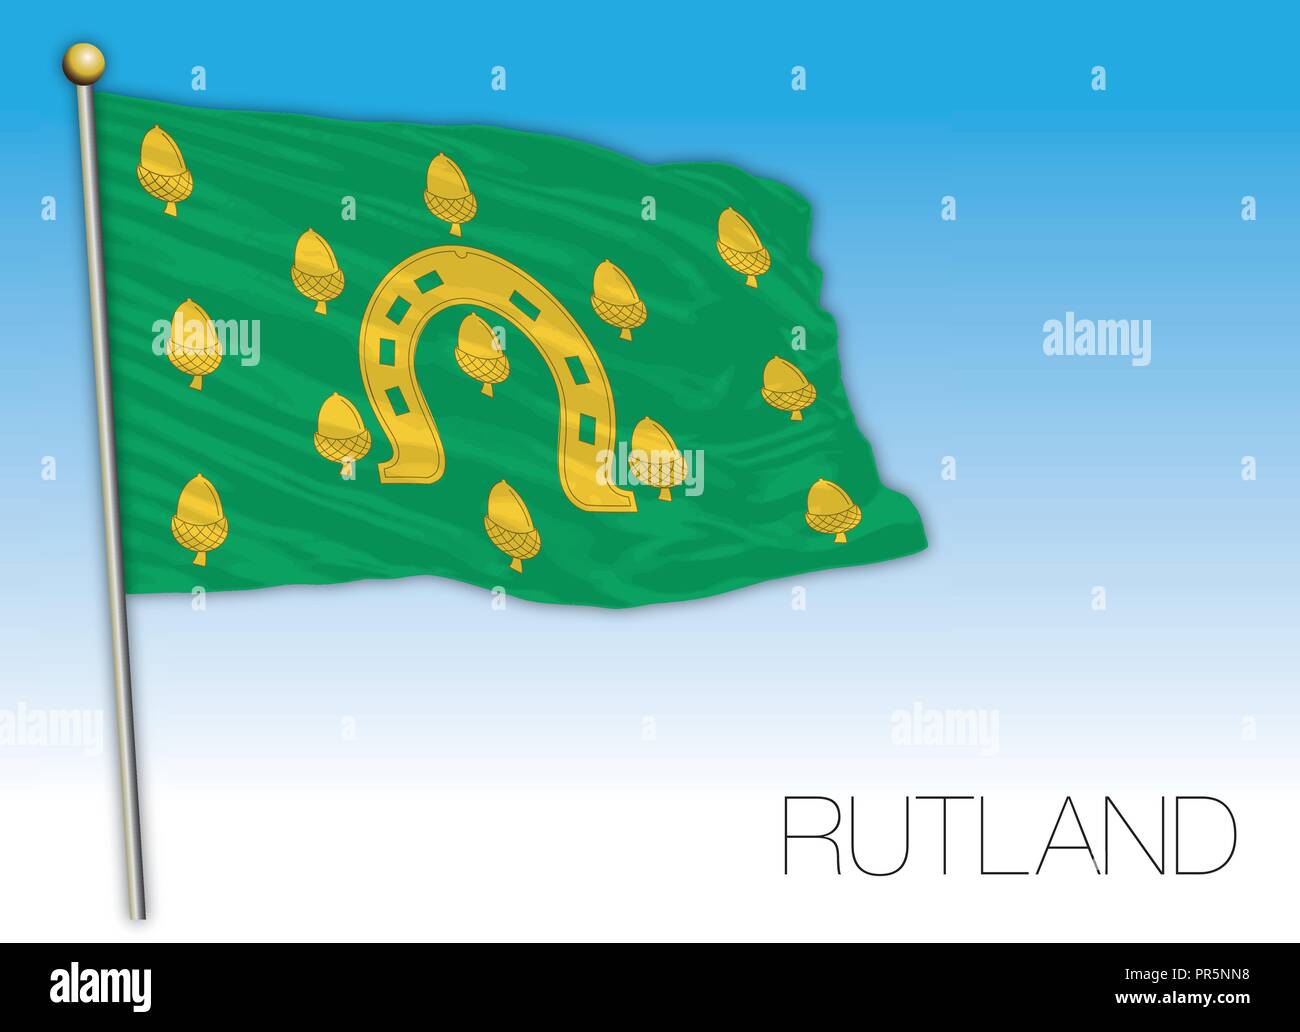 Rutland flag, United Kingdom, vector illustration Stock Vector